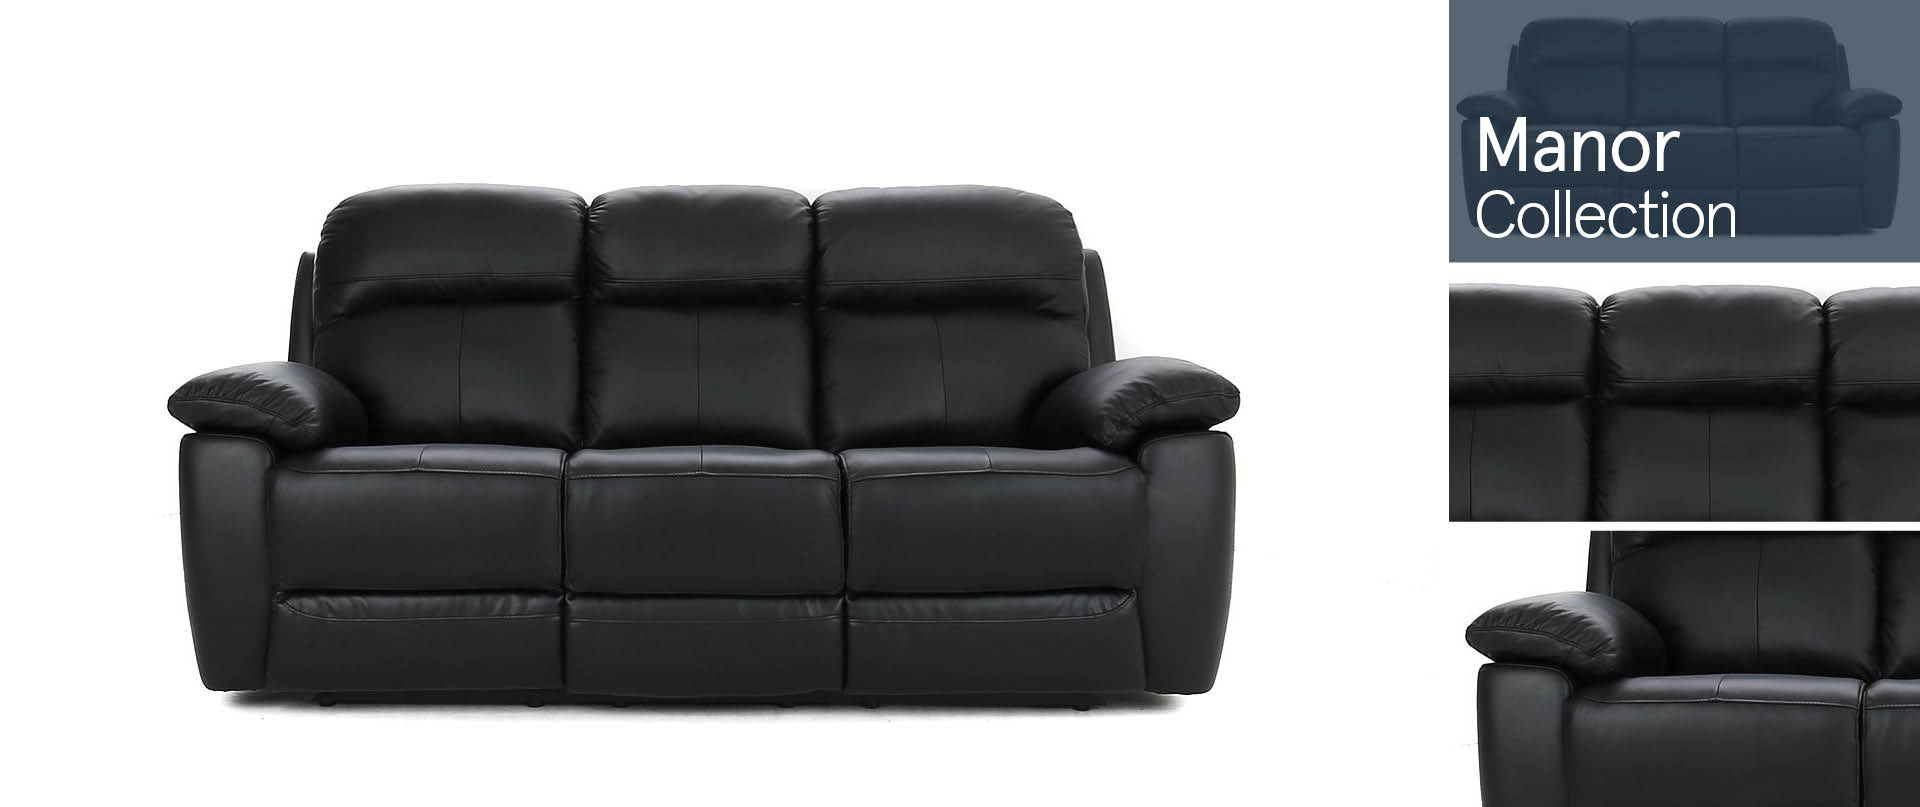 Manor Leather Sofa Ranges